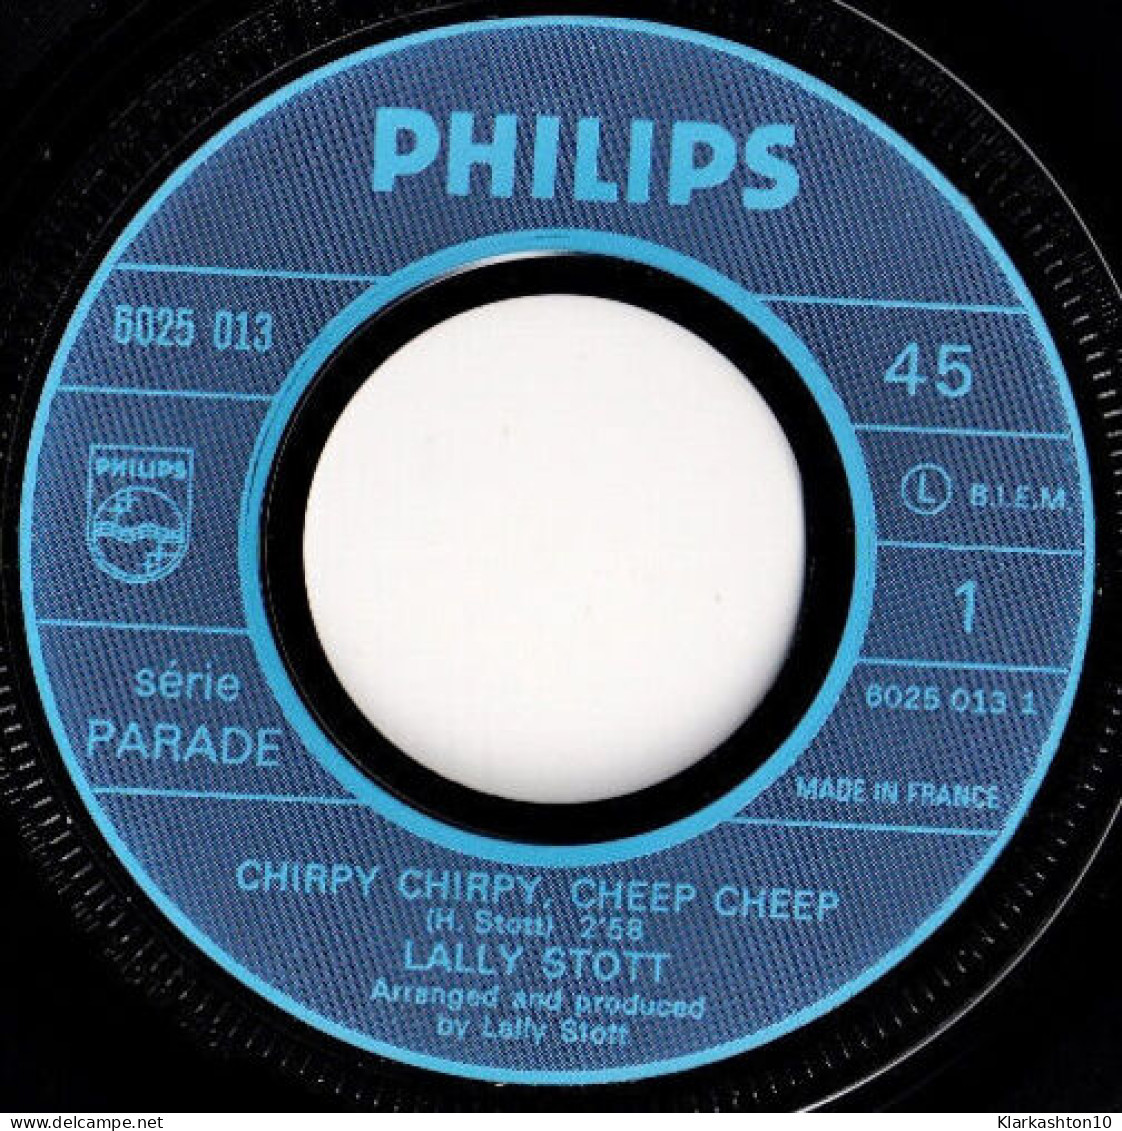 Chirpy Chirpy Cheep Cheep - Non Classés